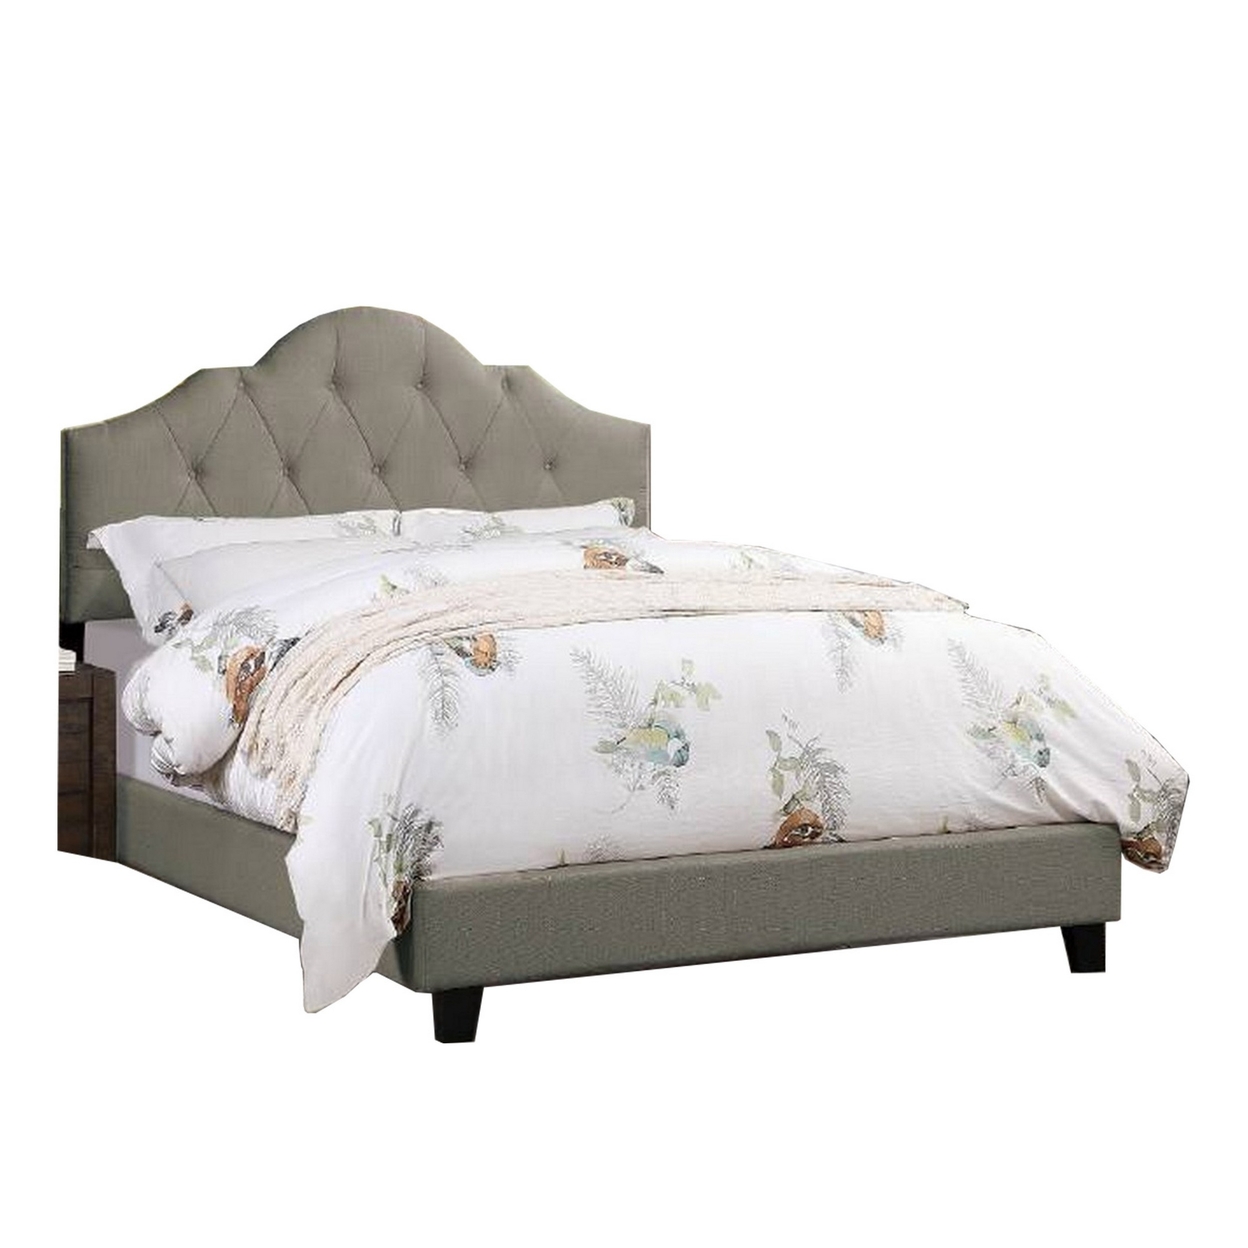 Eni Upholstered California King Size Bed, Tufted Adjustable Headboard, Gray- Saltoro Sherpi